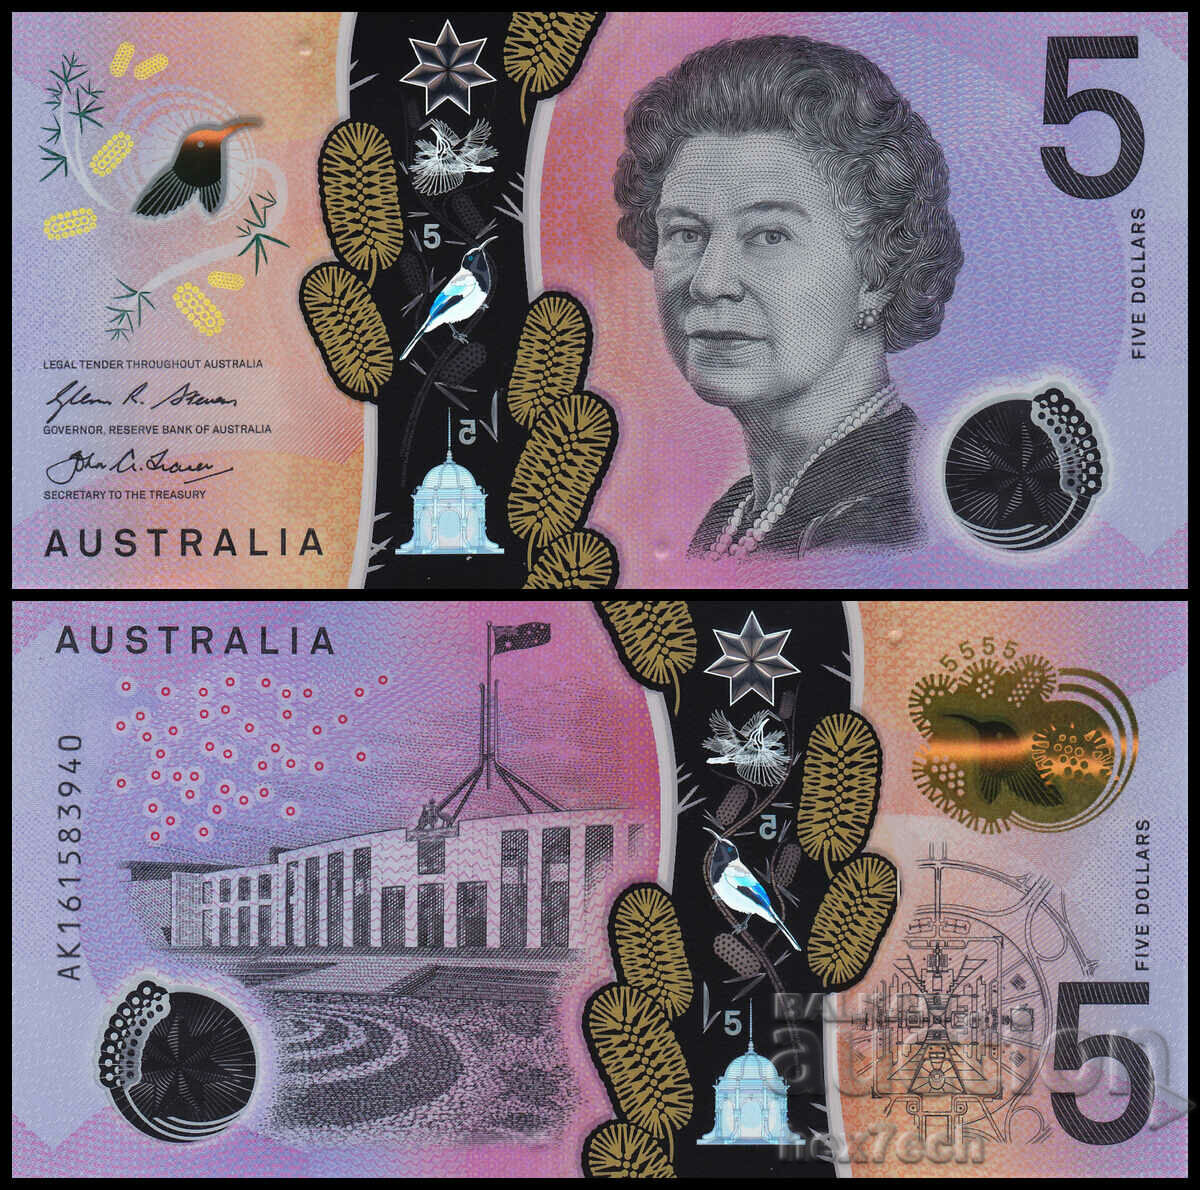 ❤️ ⭐ Australia 2016 $5 Polymer UNC New ⭐ ❤️